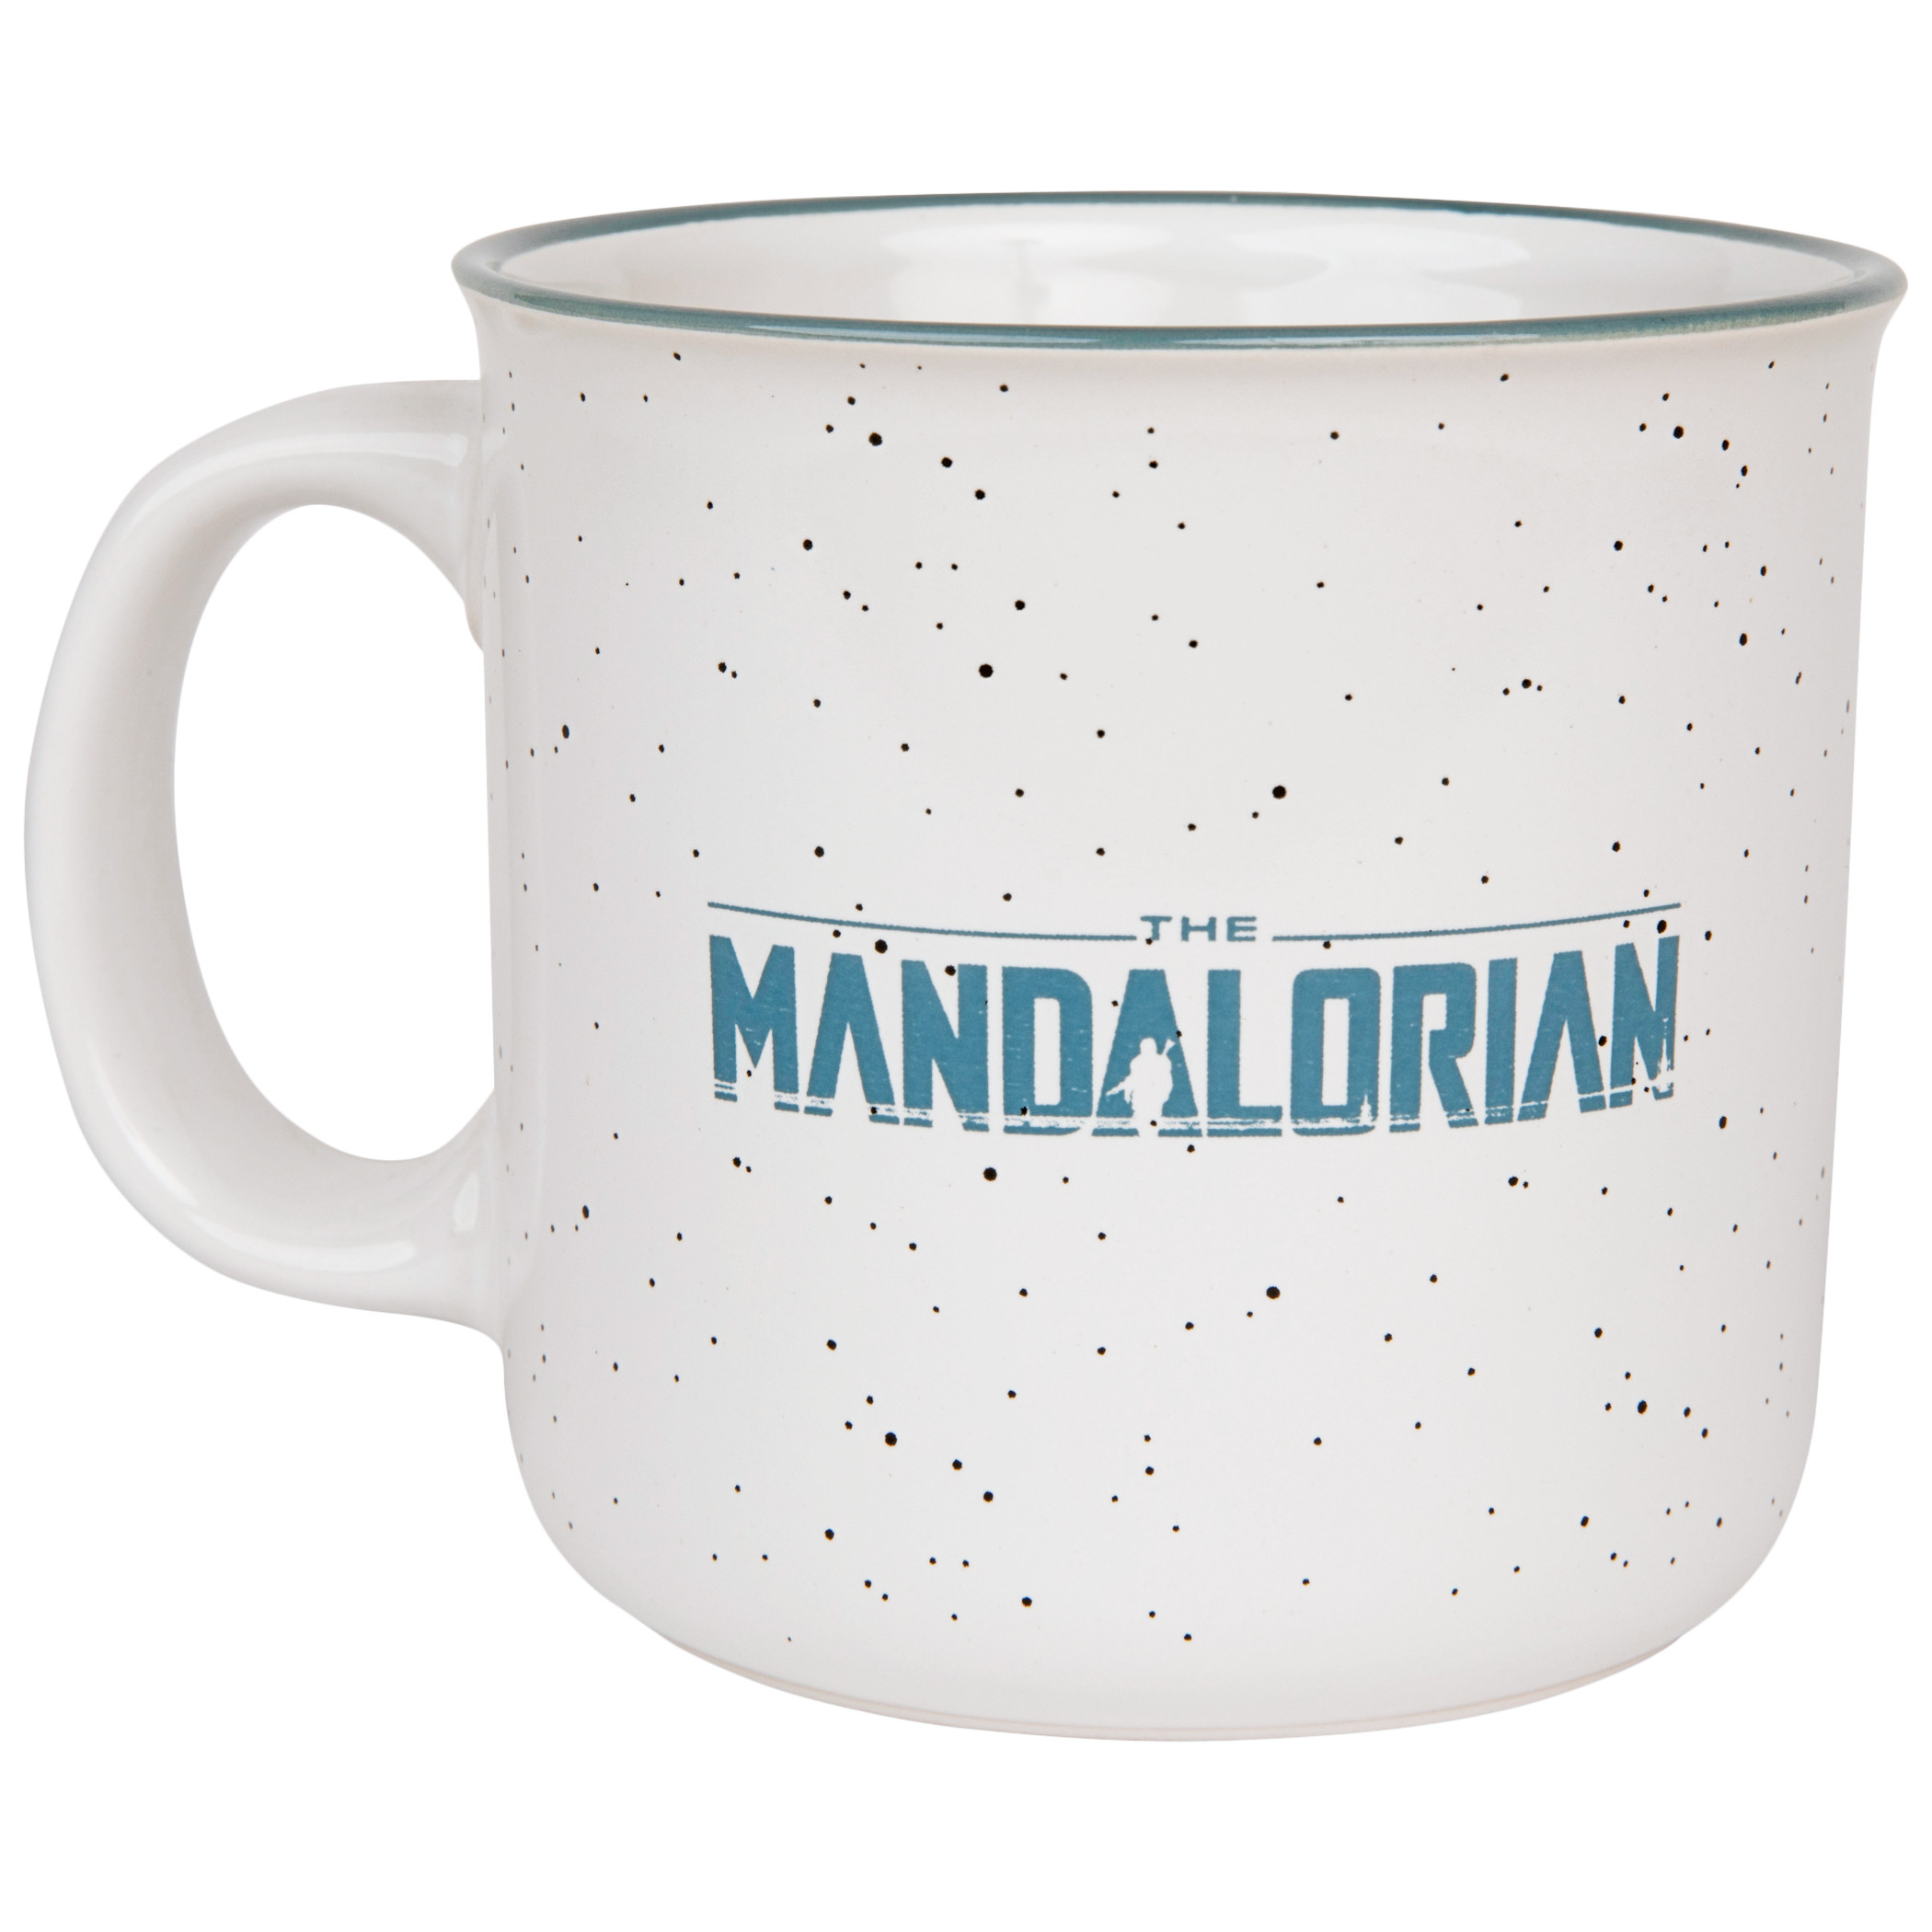 Star Wars The Mandalorian and The Child Grogu 20 Ounce Camper Mug